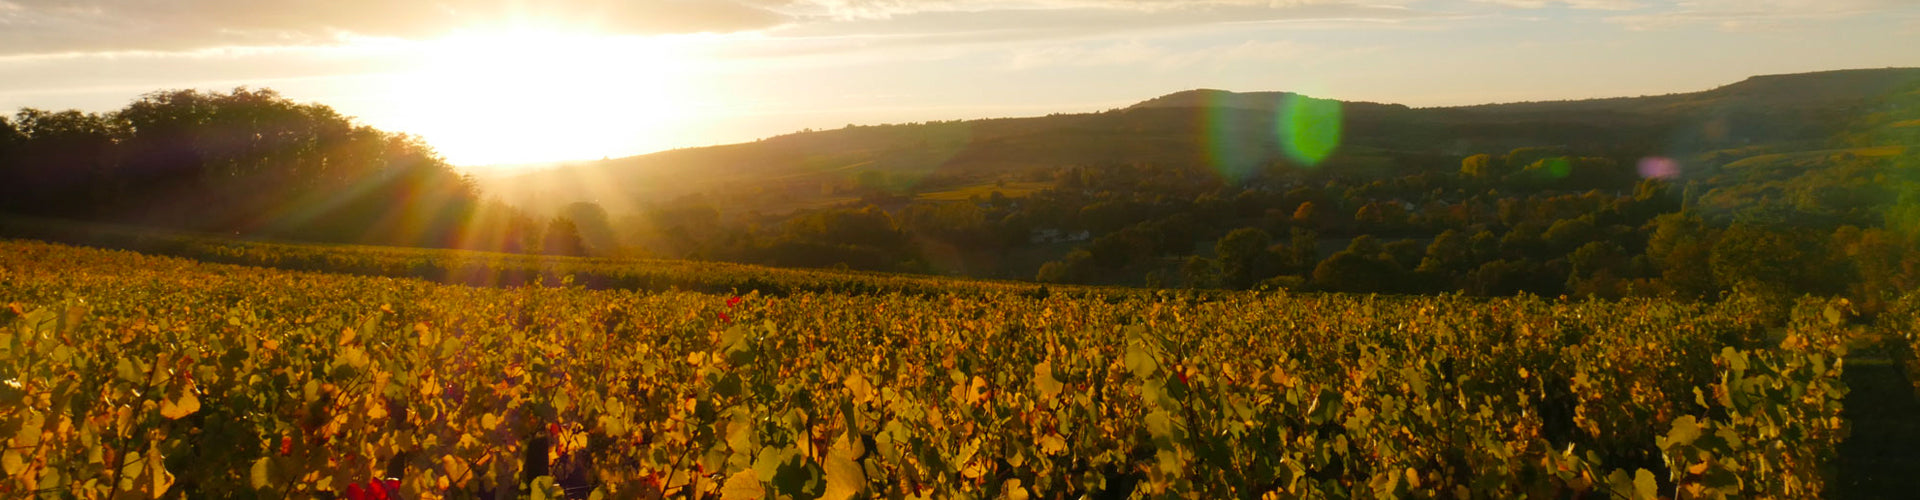 Domaine Fiona Leroy vineyards in Maranges, Burgundy